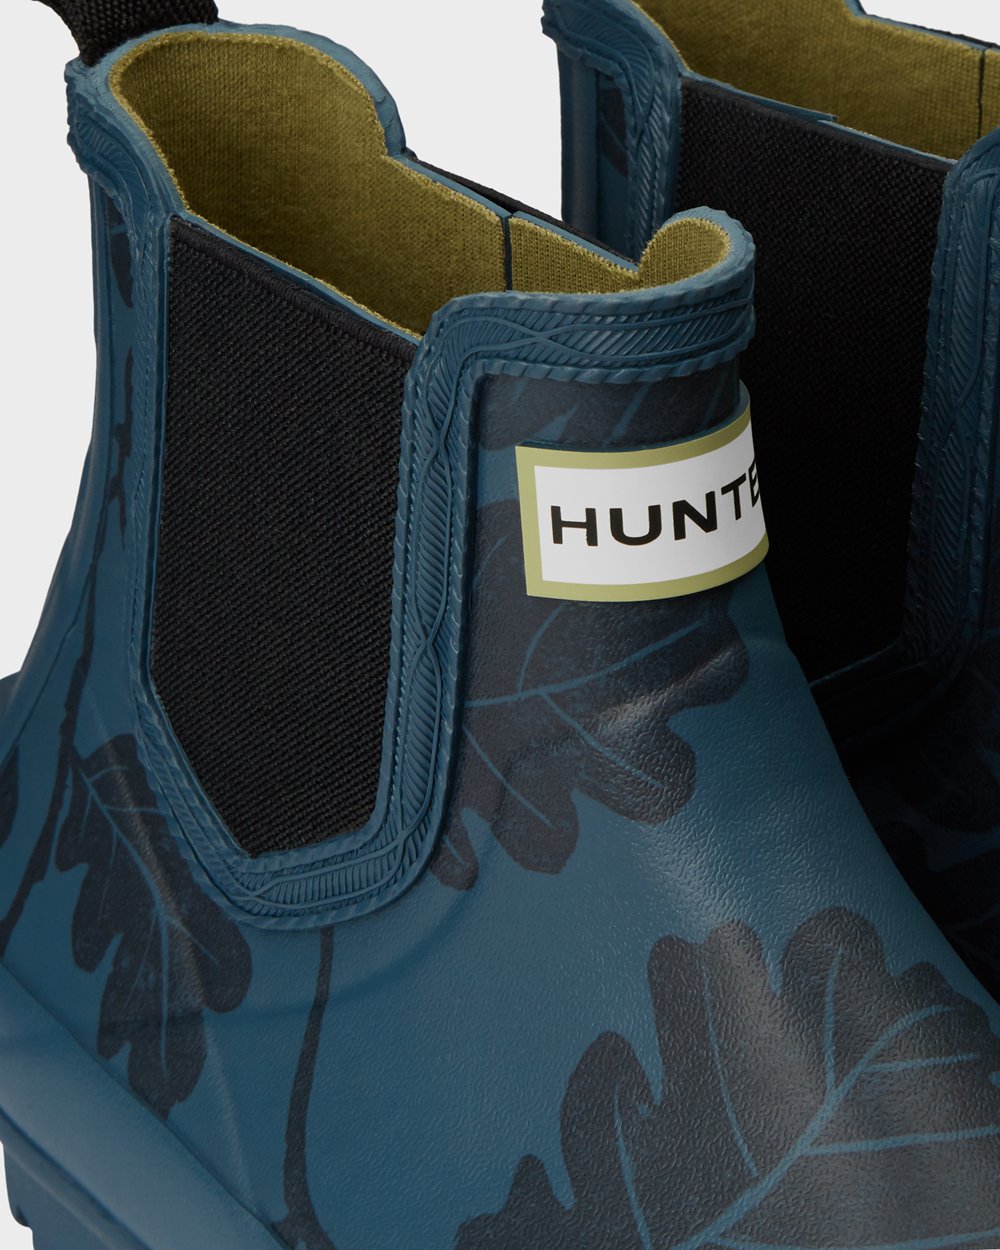 Womens Chelsea Boots - Hunter National Trust Norris Field (63NIHSPMX) - Blue